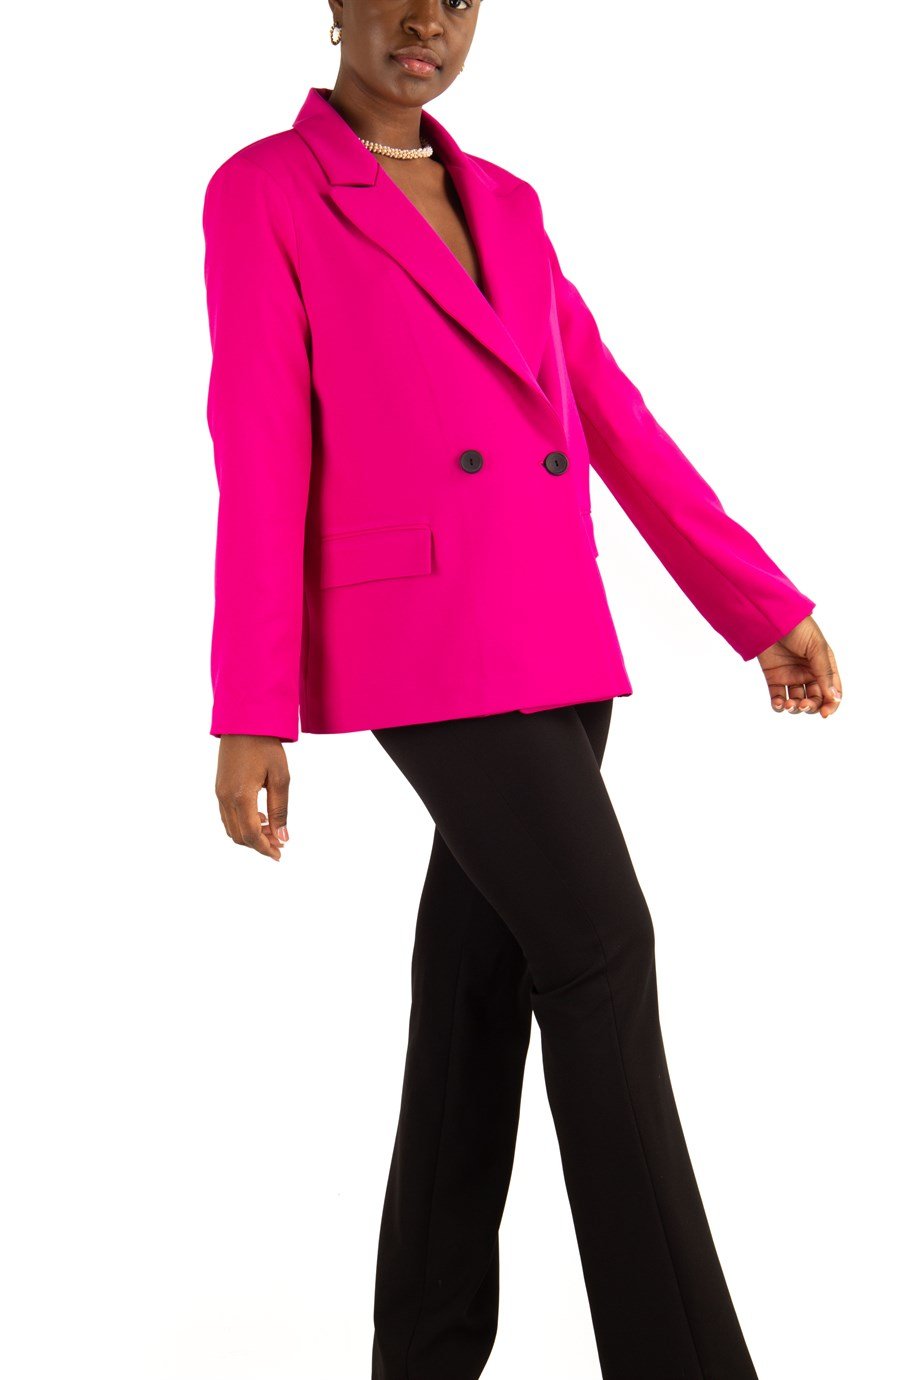 Women six-buttons coat with belt wholesale Fuchsia color